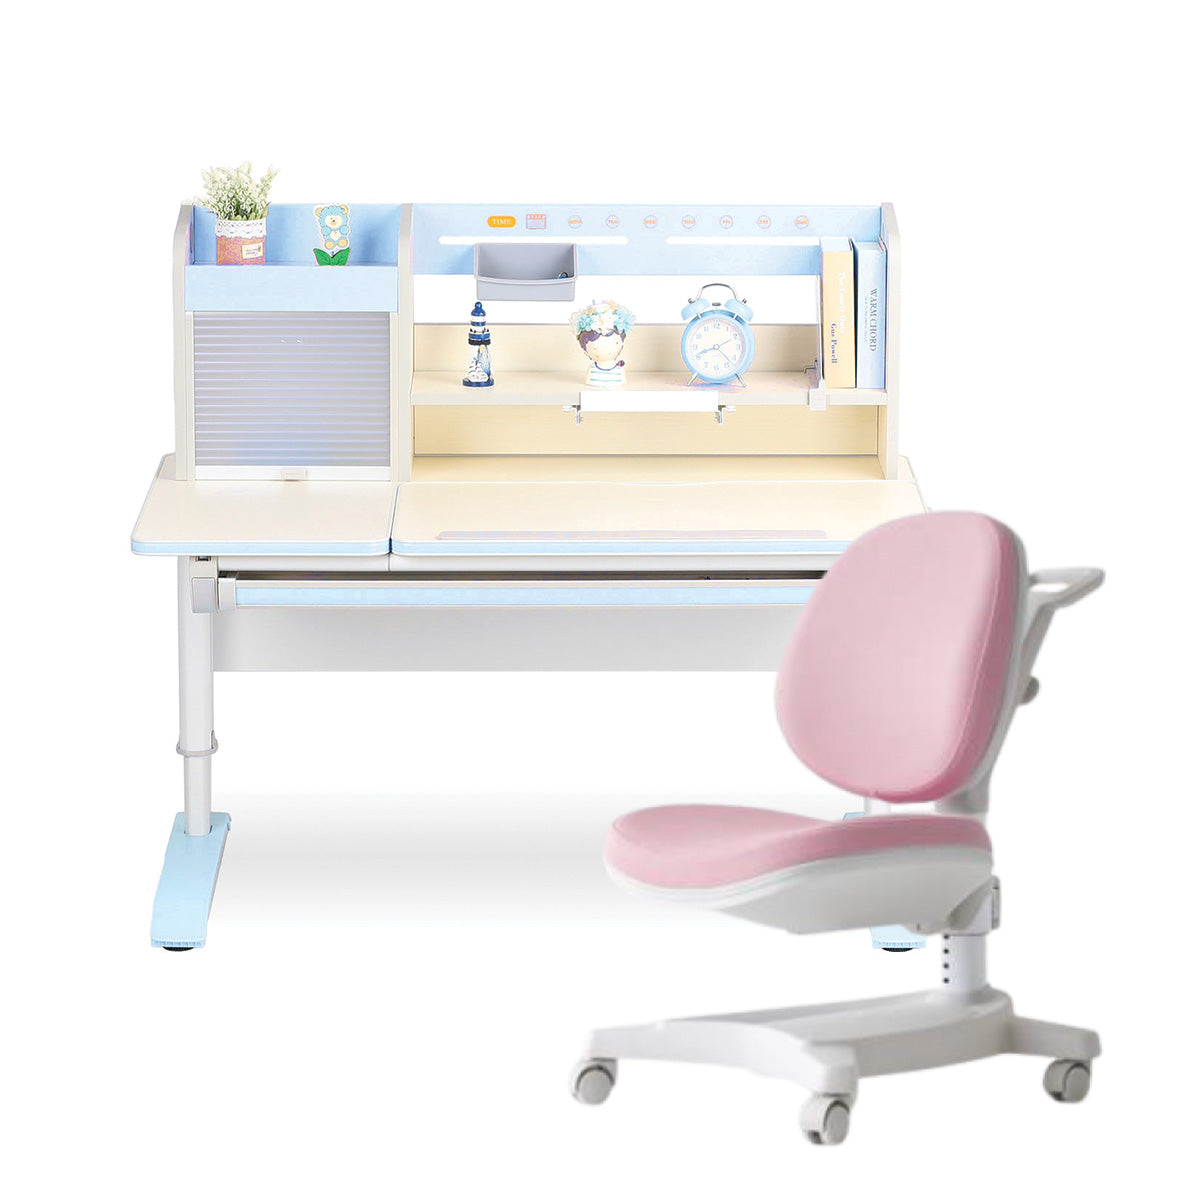 IMPACT Ergo-Growing Kids Study Desk And Chair Set 1200mm x 700mm, IM-D12L1200V2-BL